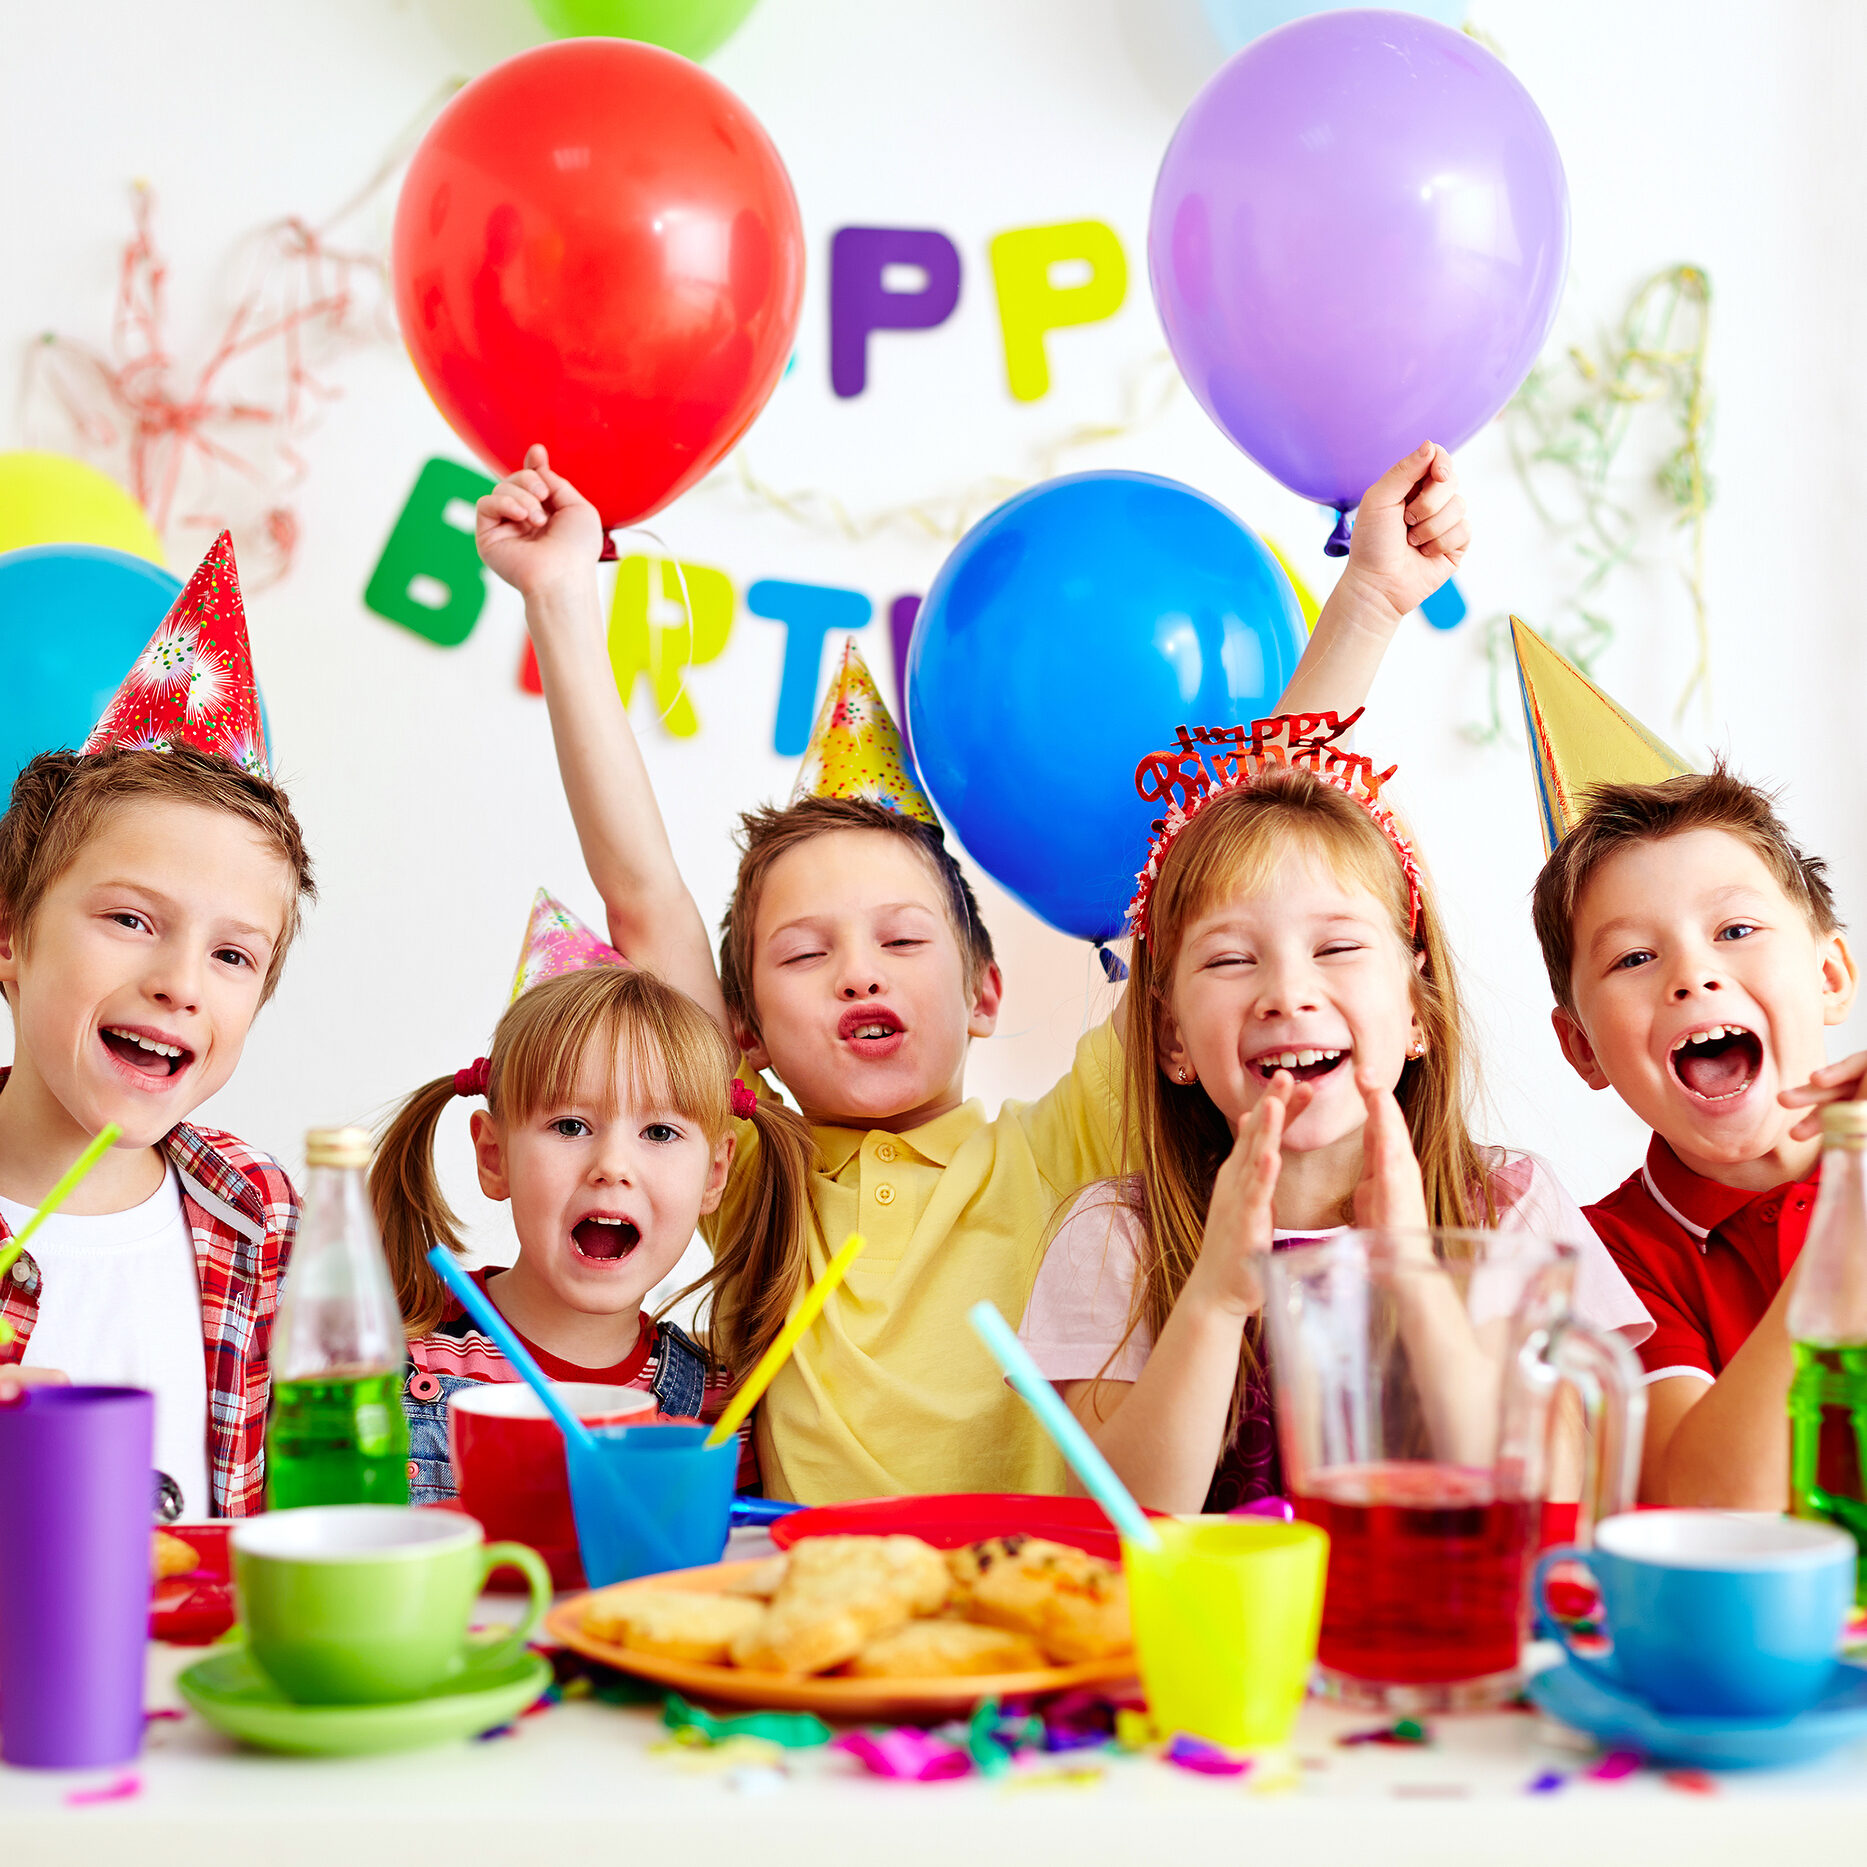 bigstock-Group-of-adorable-kids-having-39030568